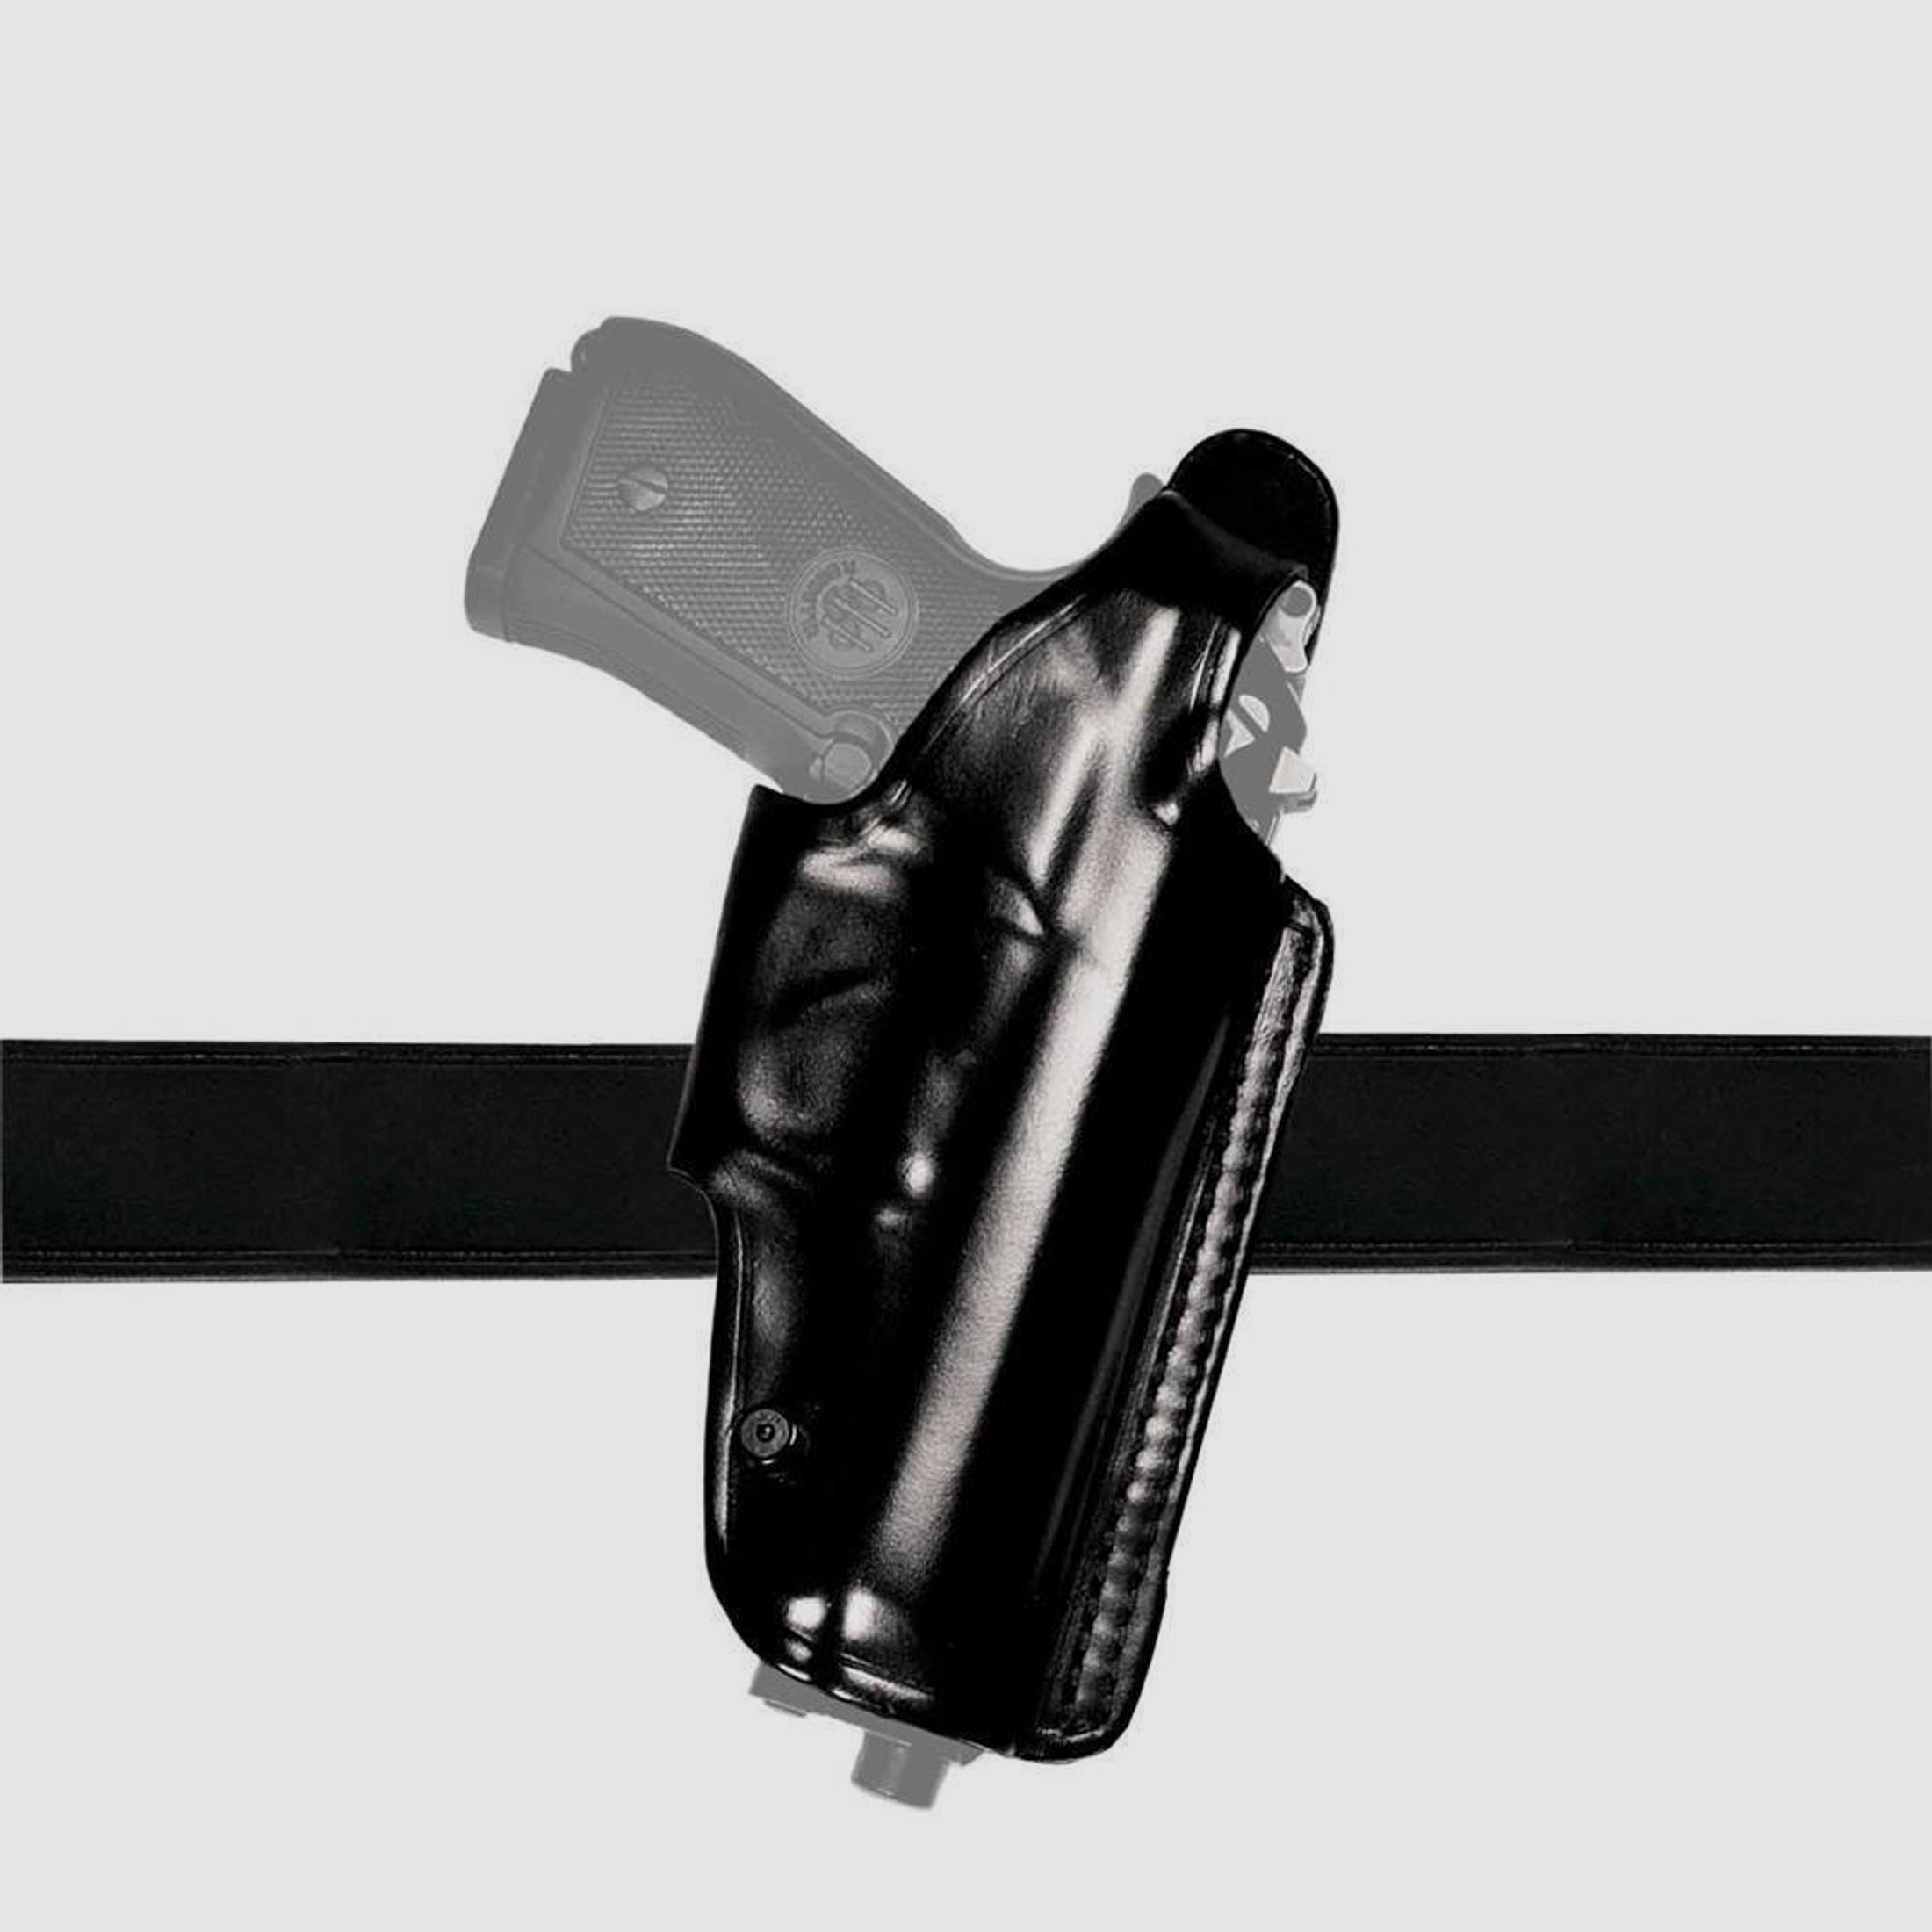 Mehrzweck-Schulterholster/Gürtelholster "Miami 2" Walther PPK Braun Linkshänder